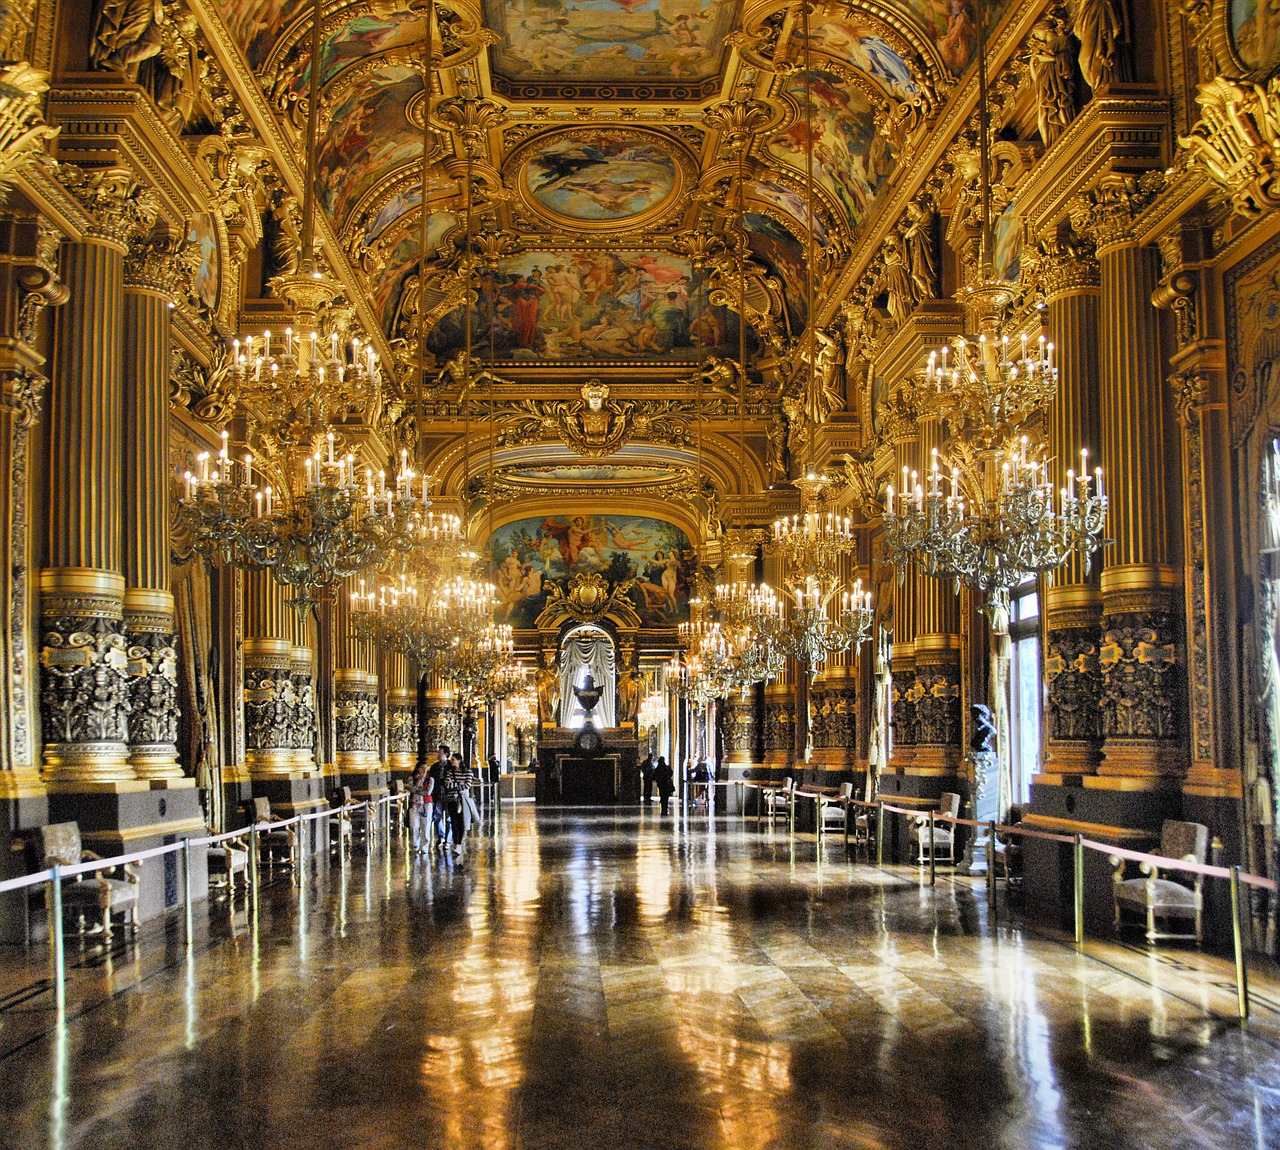 Interior of the Opera Garnier palace